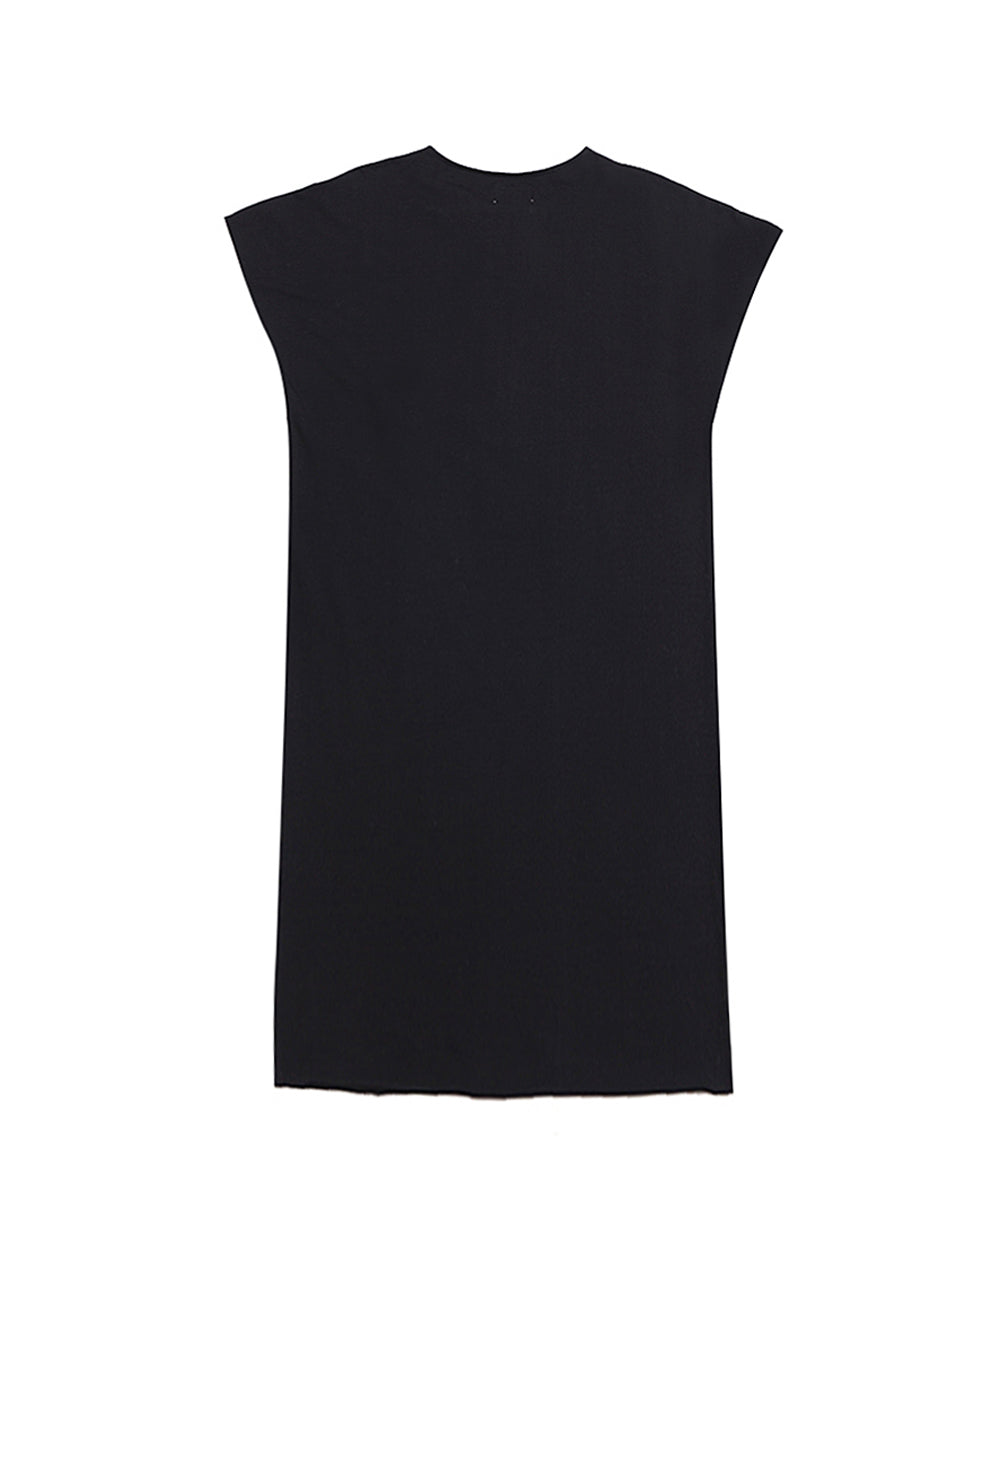 Sixth June - Dress grunge lacing black W2642VDR